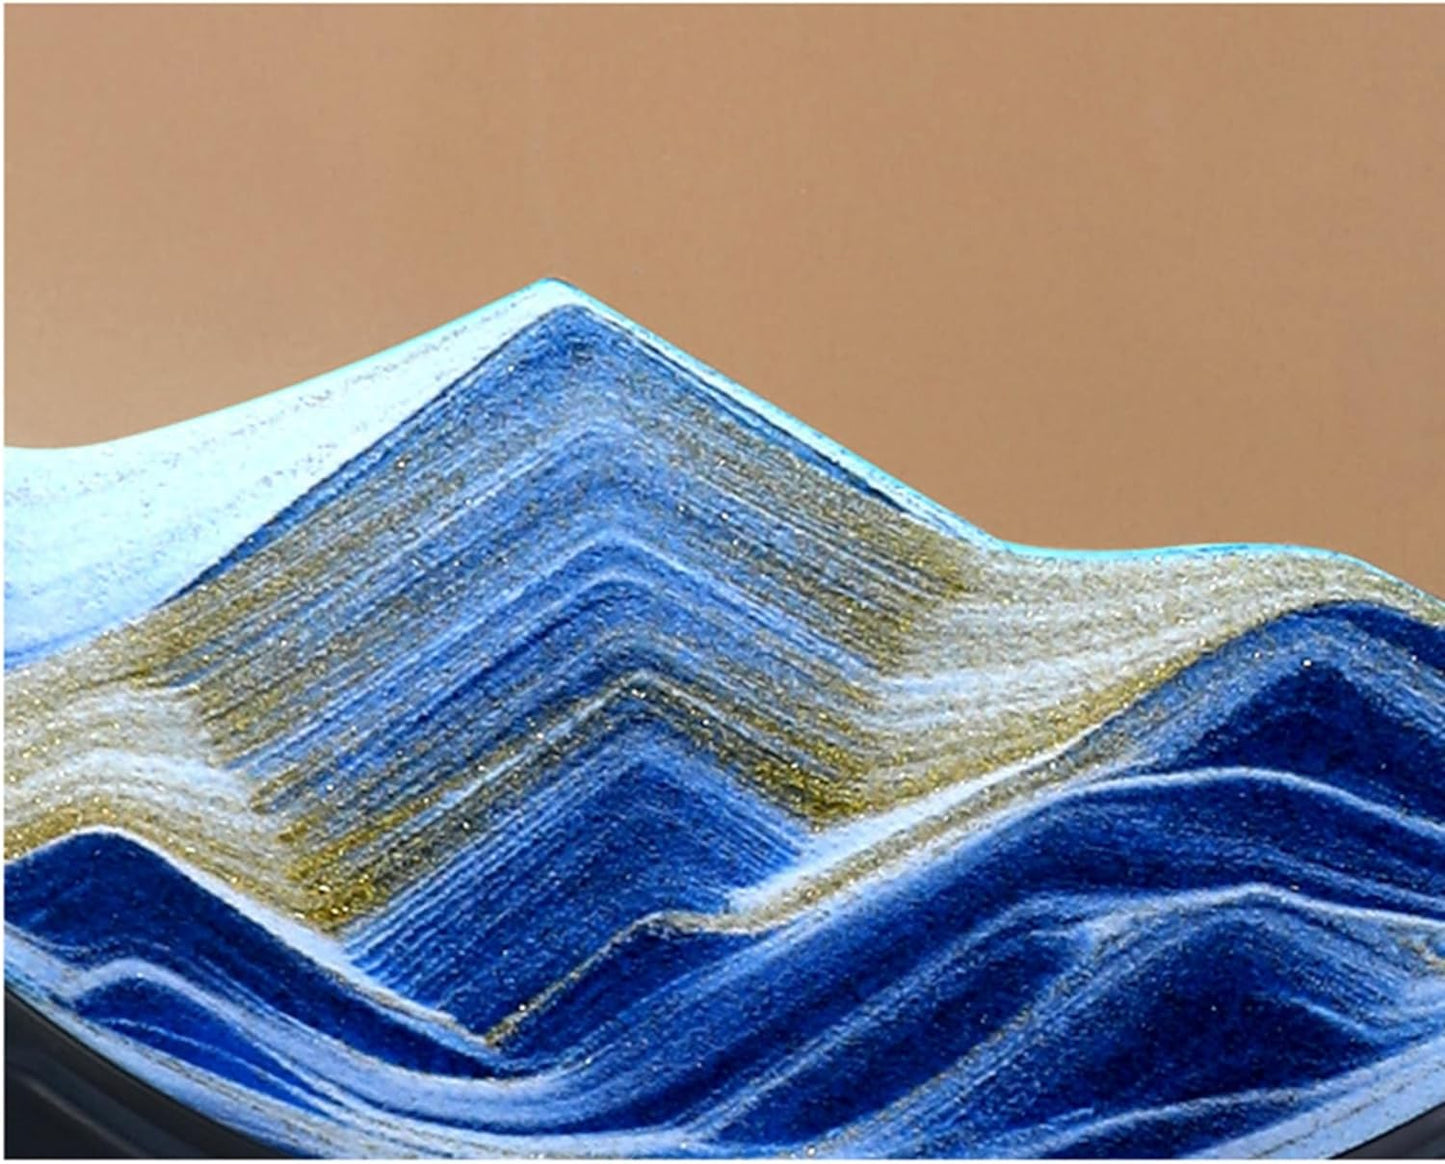 HIVAGI® Sand Art Liquid Motion, Rectangular Stress Relief Moving Sand Art Picture 3D.